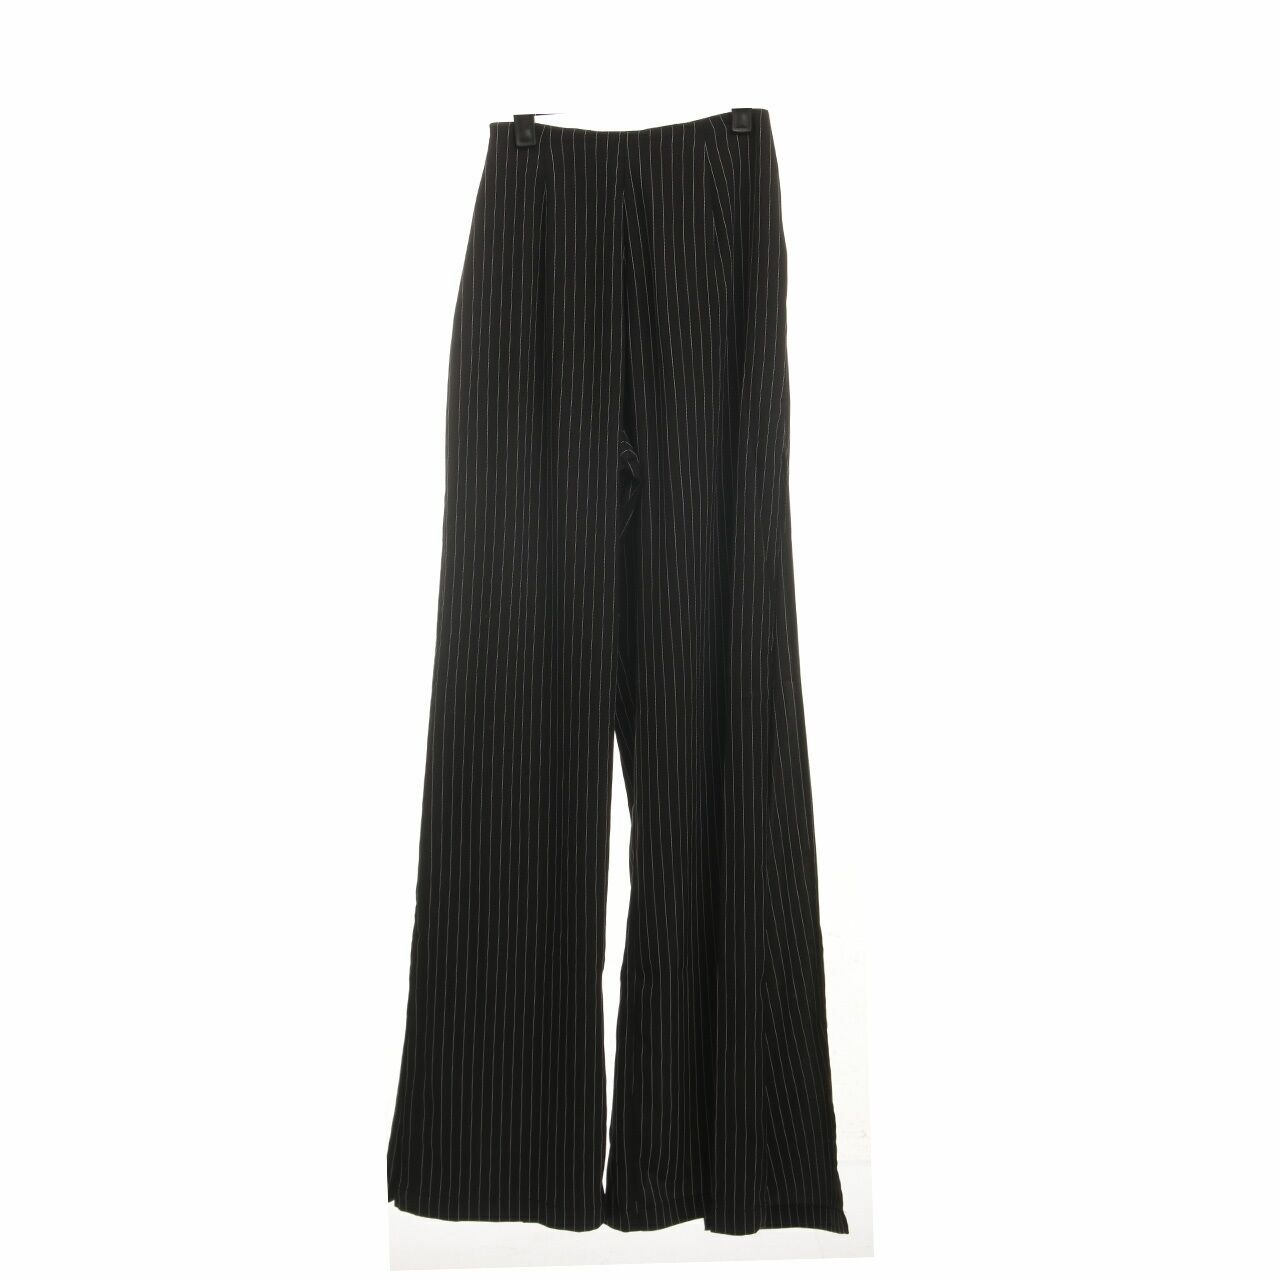 Maryalle Black Stripes Long Pants